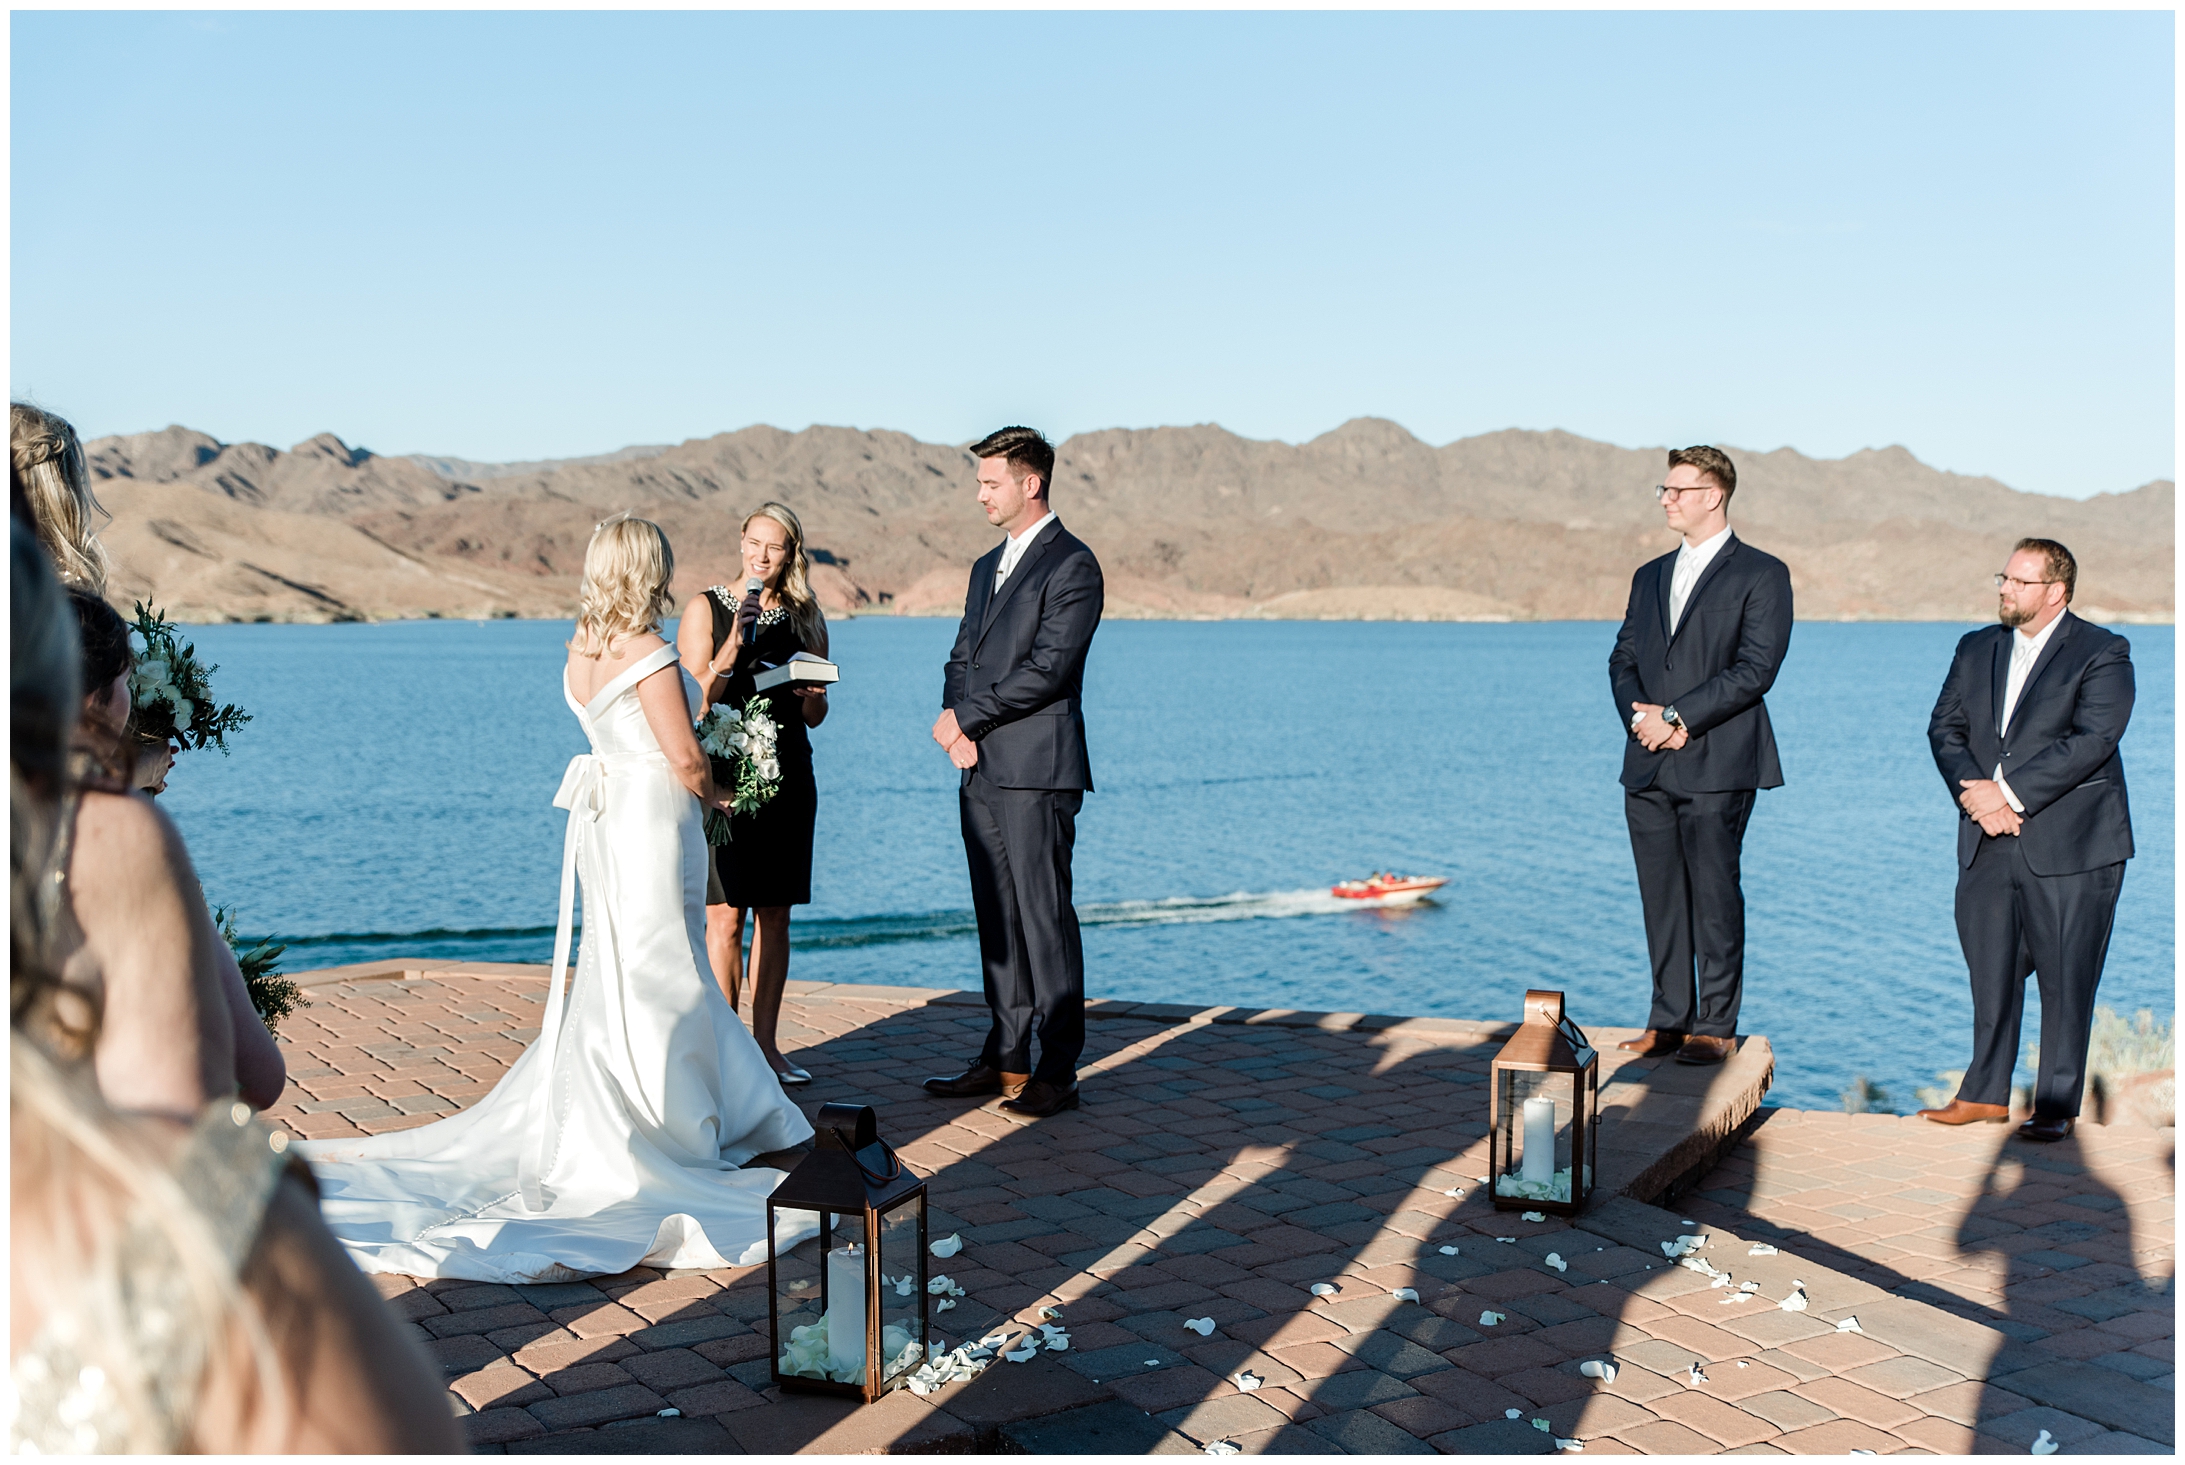 wedding ceremony overlooking a lake